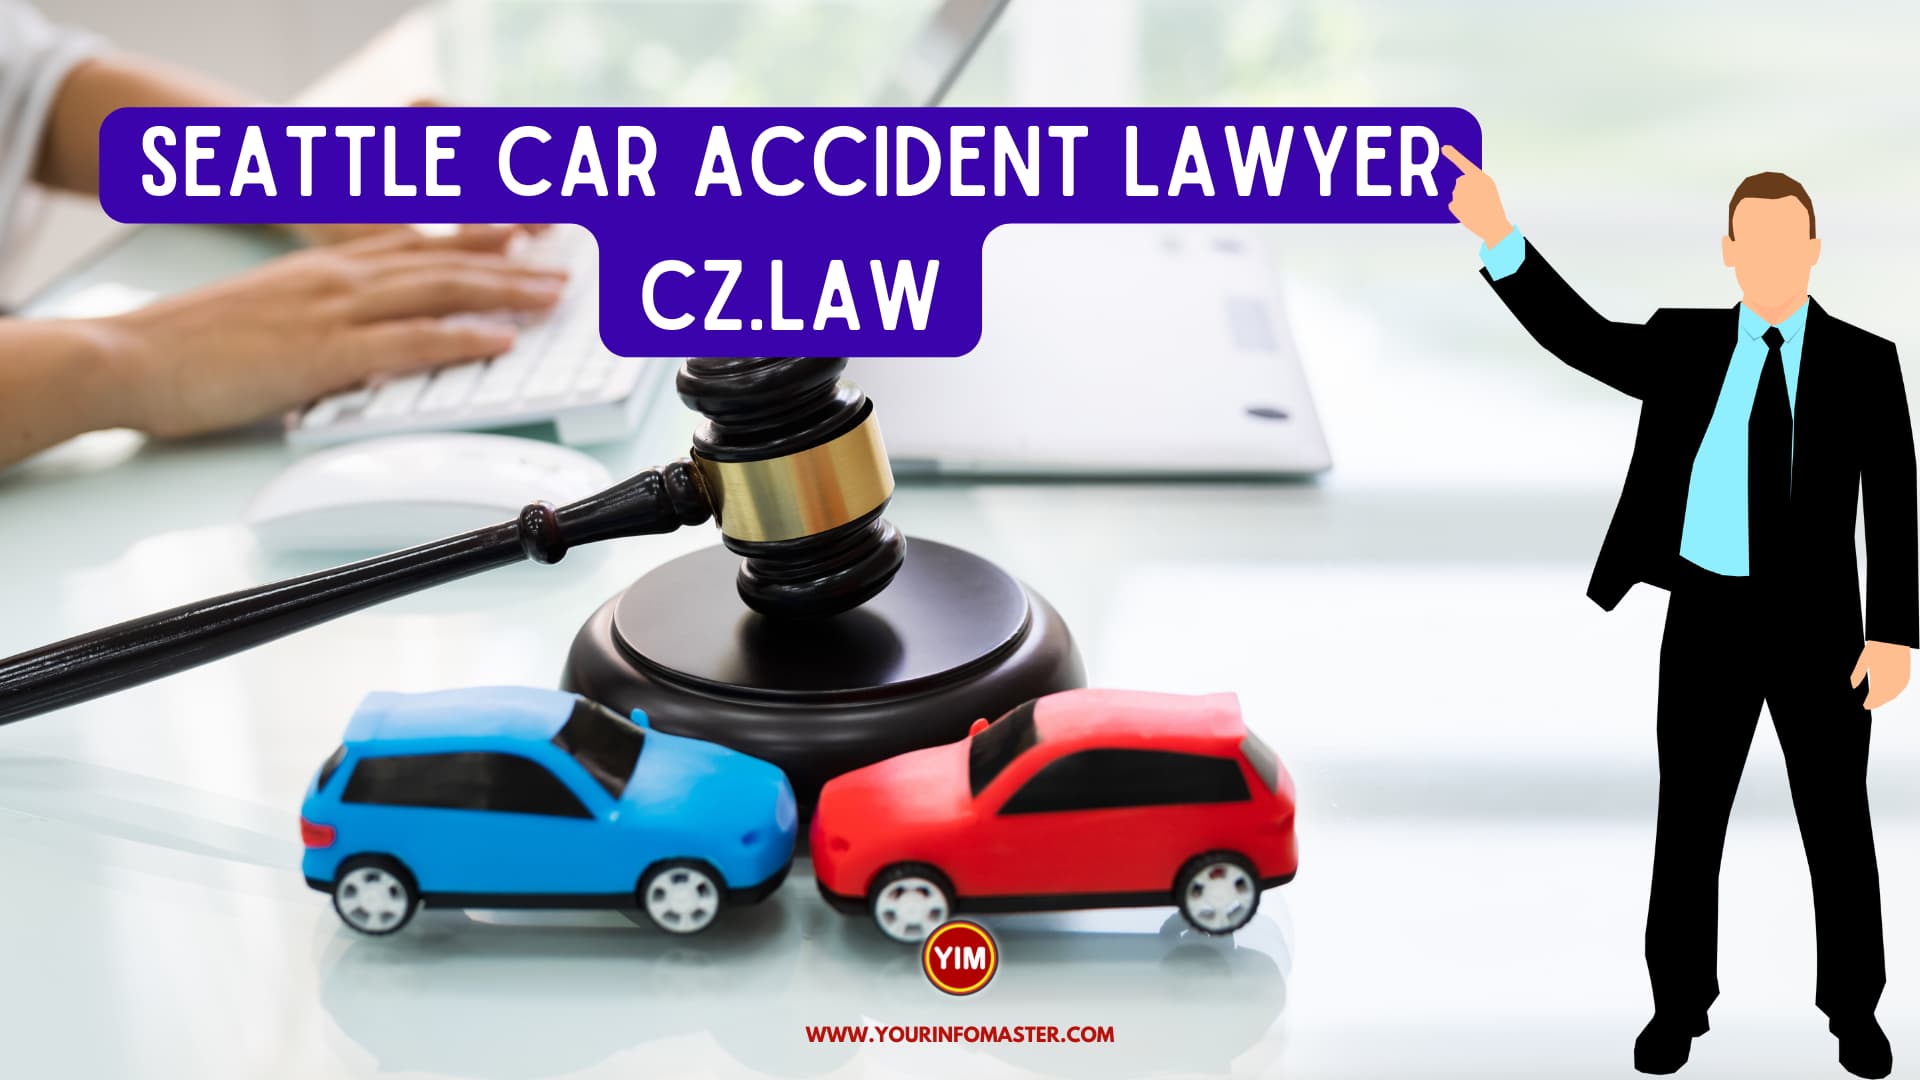 Seattle car accident lawyer CZ.LAW